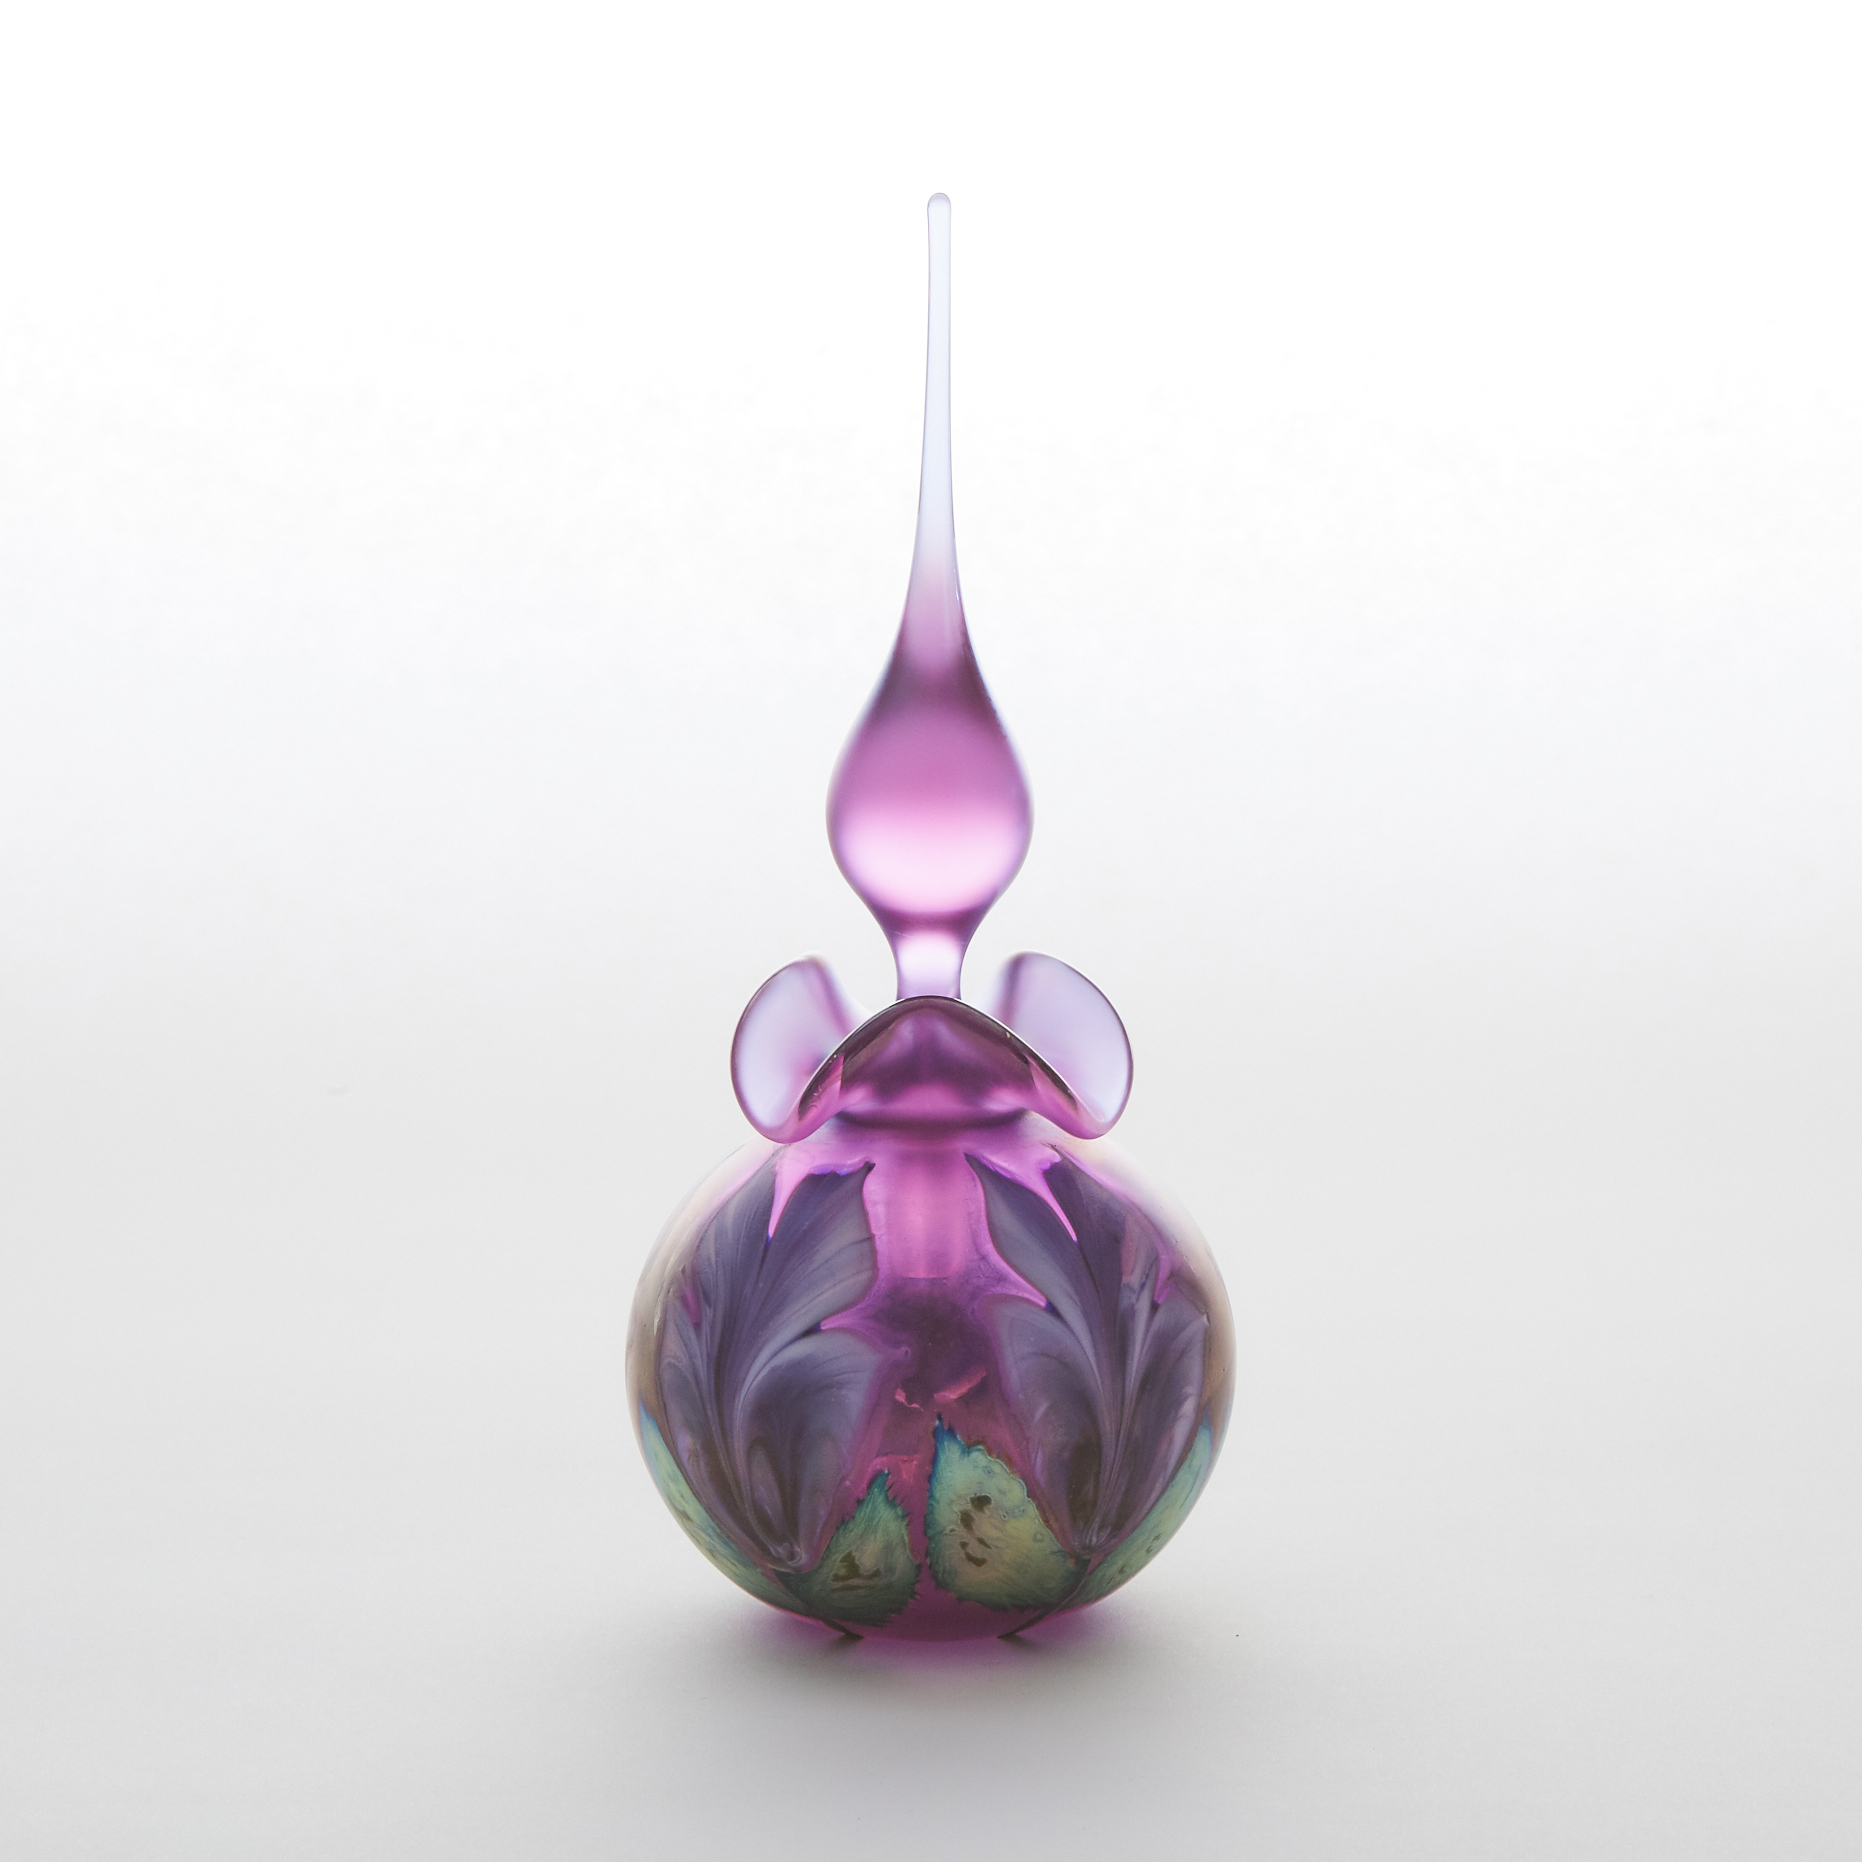 Daniel Lotton (American, b.1963), Iridescent Glass Perfume Bottle, 2002